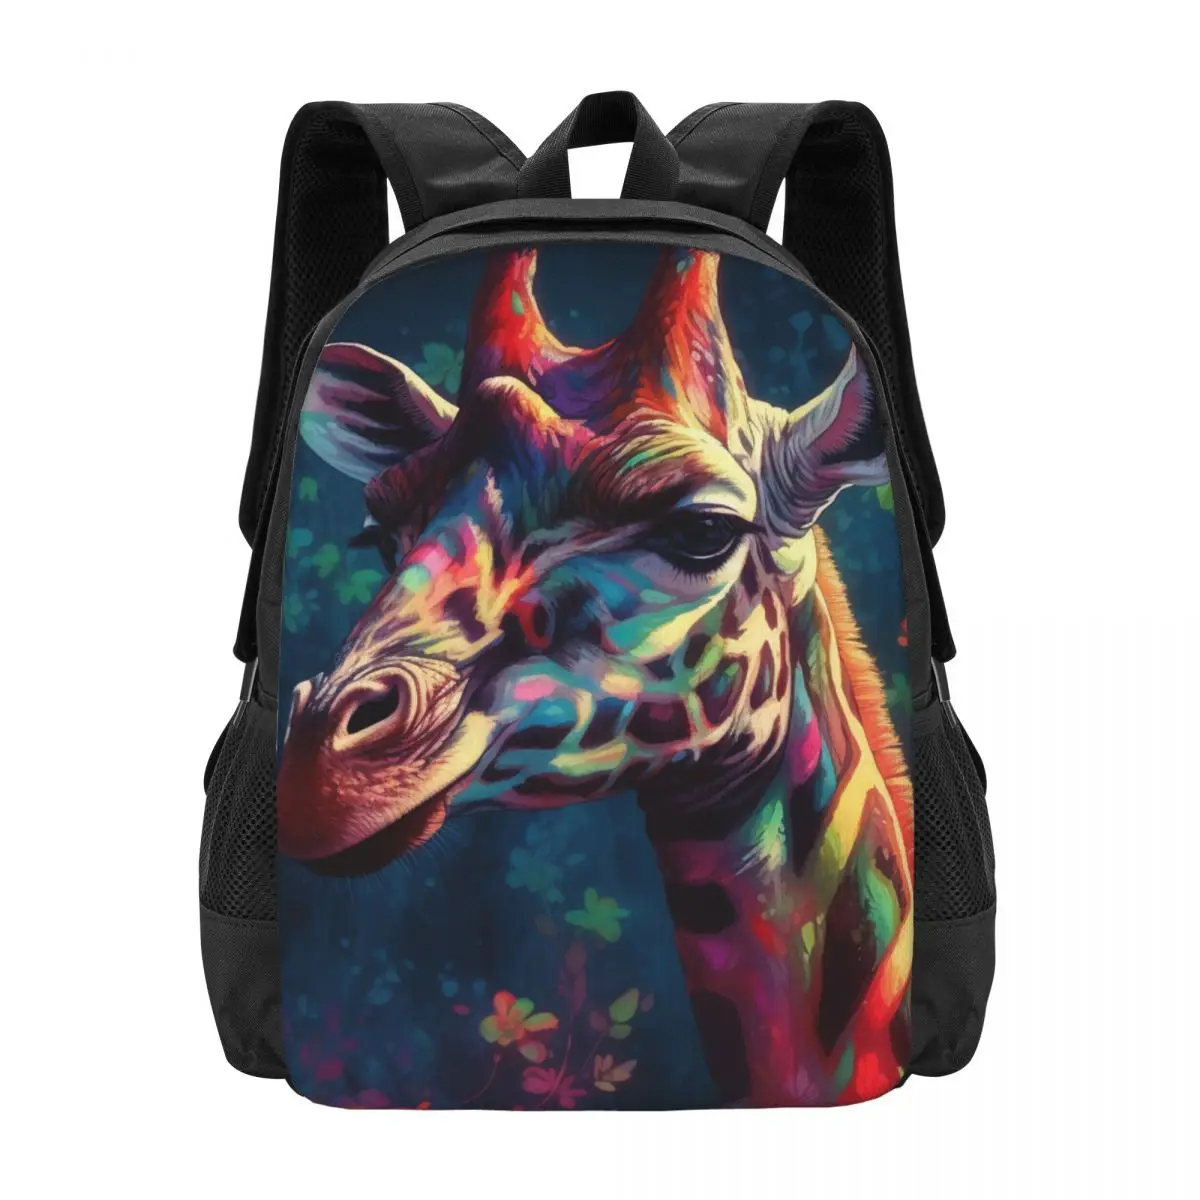 

Giraffe Backpack Neon Colorful Painting Trekking Backpacks Boy Girl Cool School Bags Colorful Big Rucksack